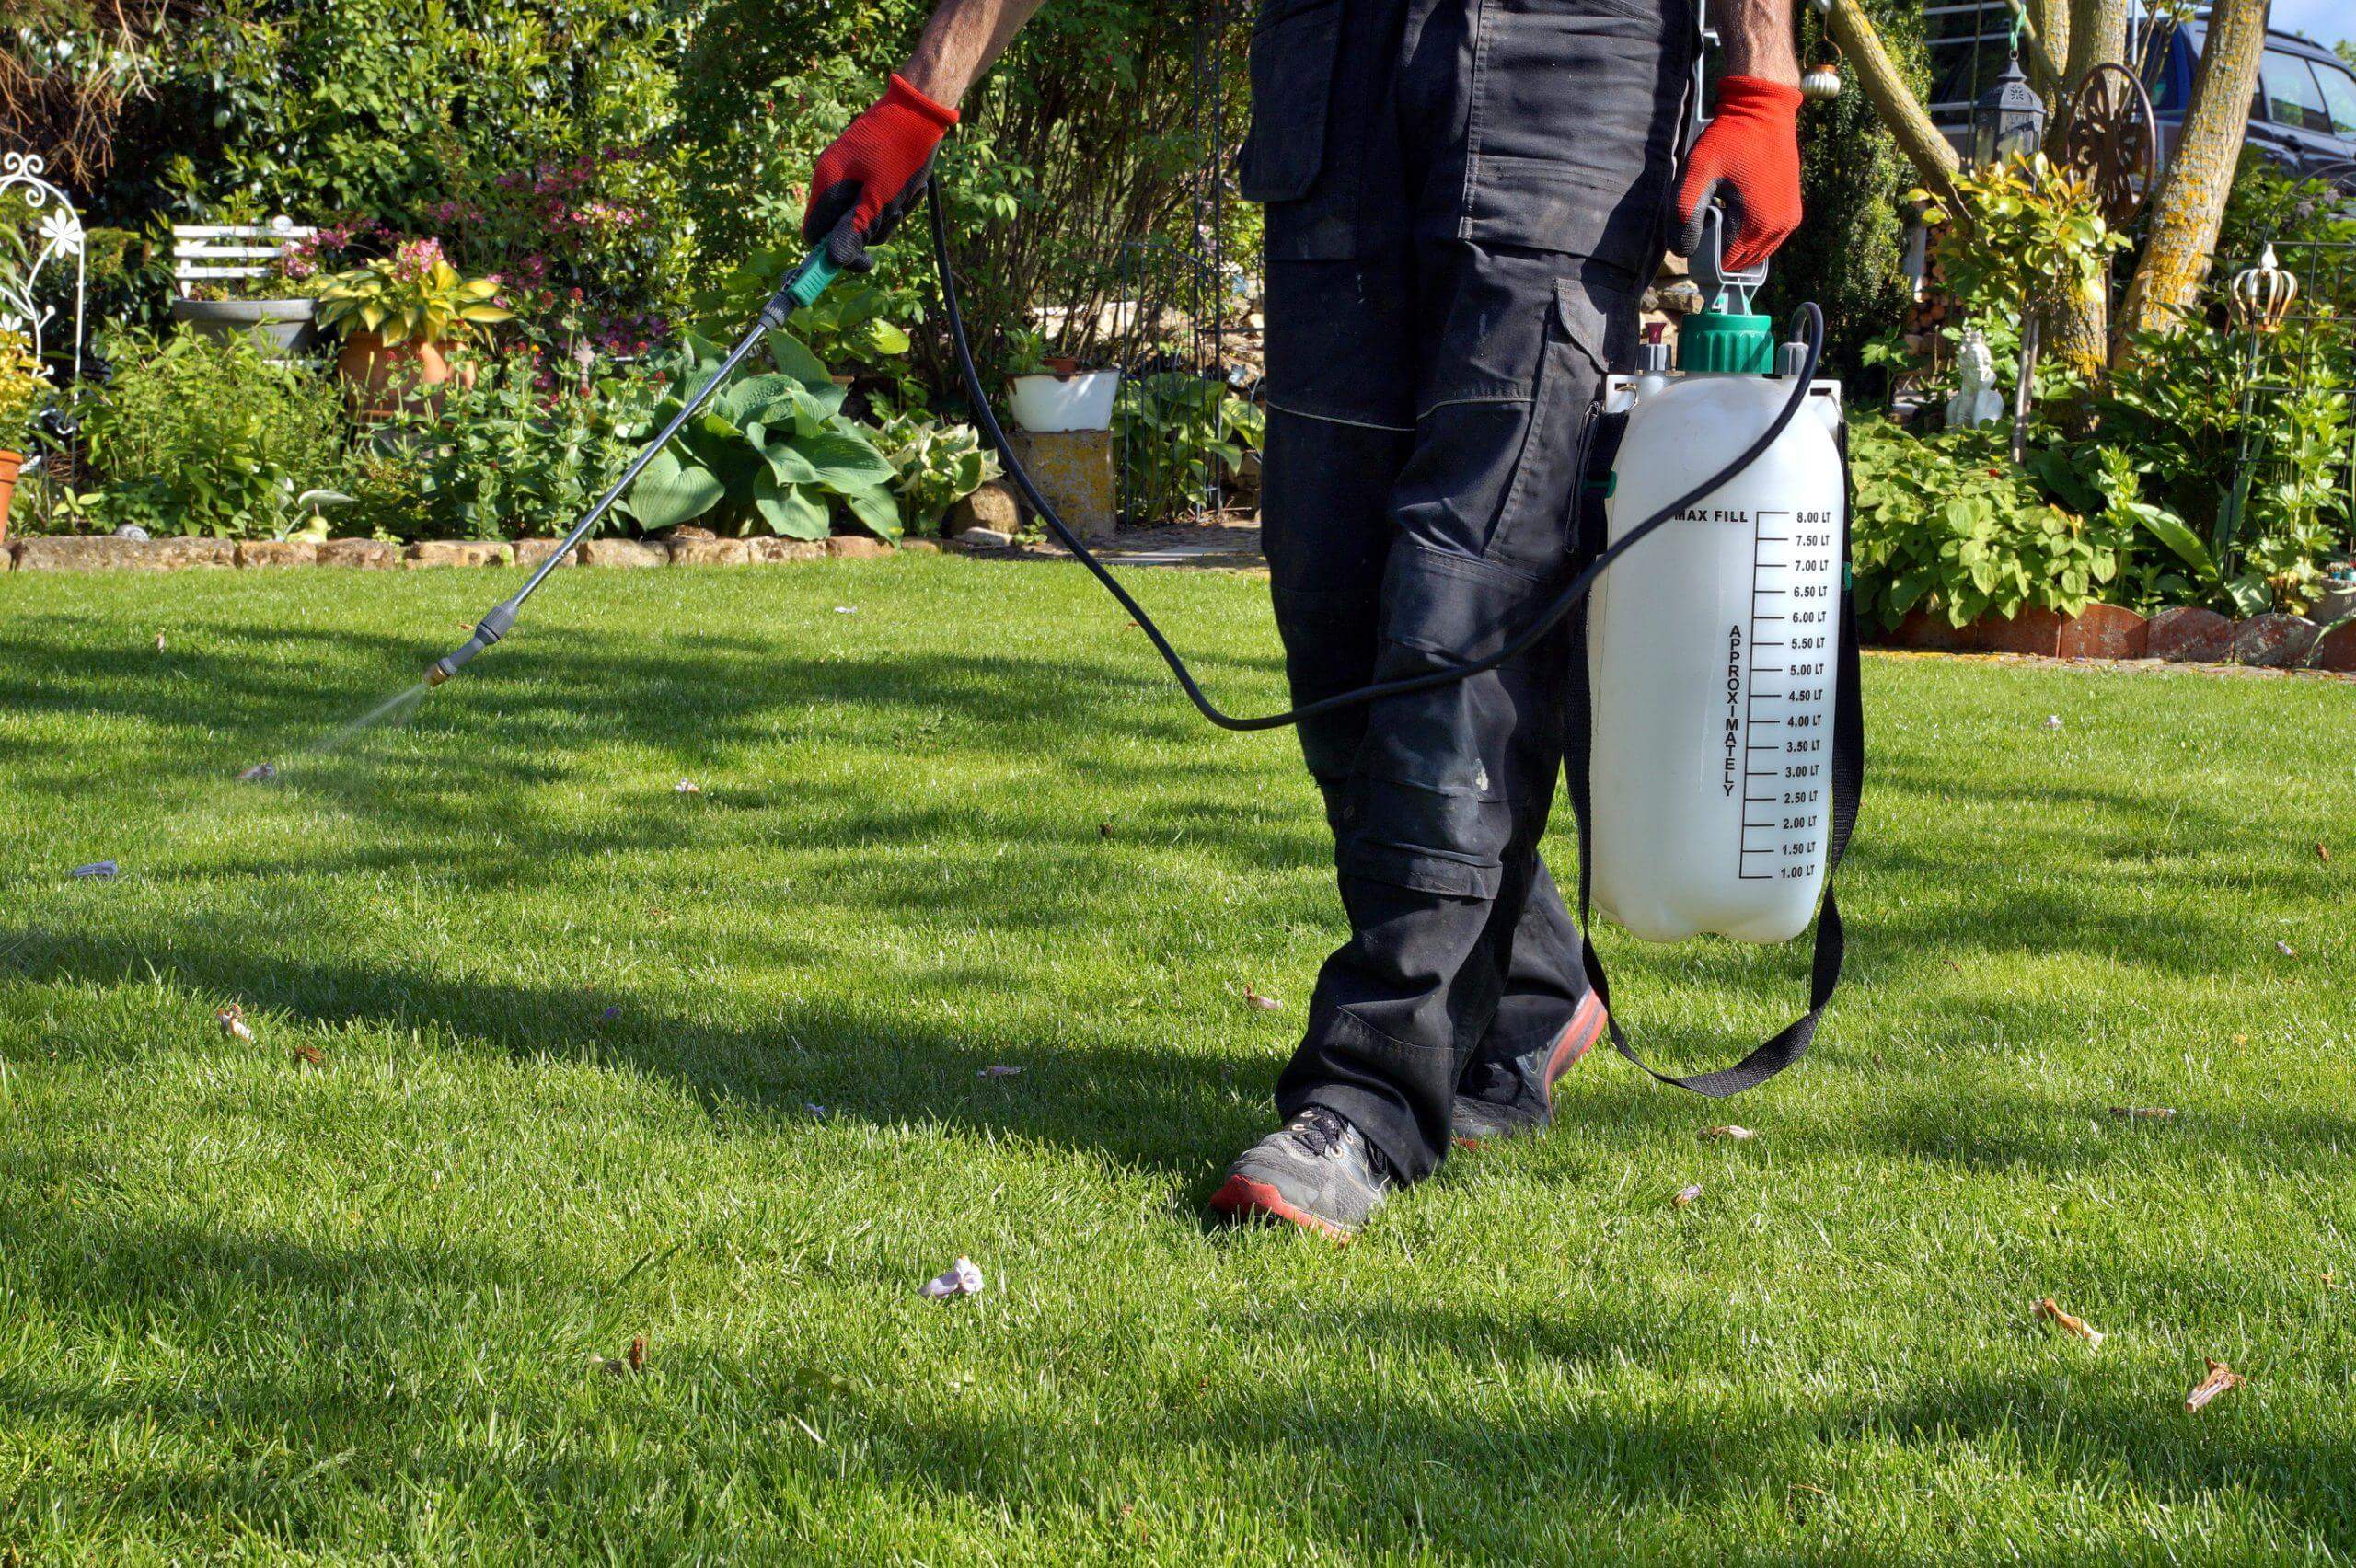 Spraying pesticide with portable sprayer to eradicate garden weeds in Pesticide use is hazardous to health.